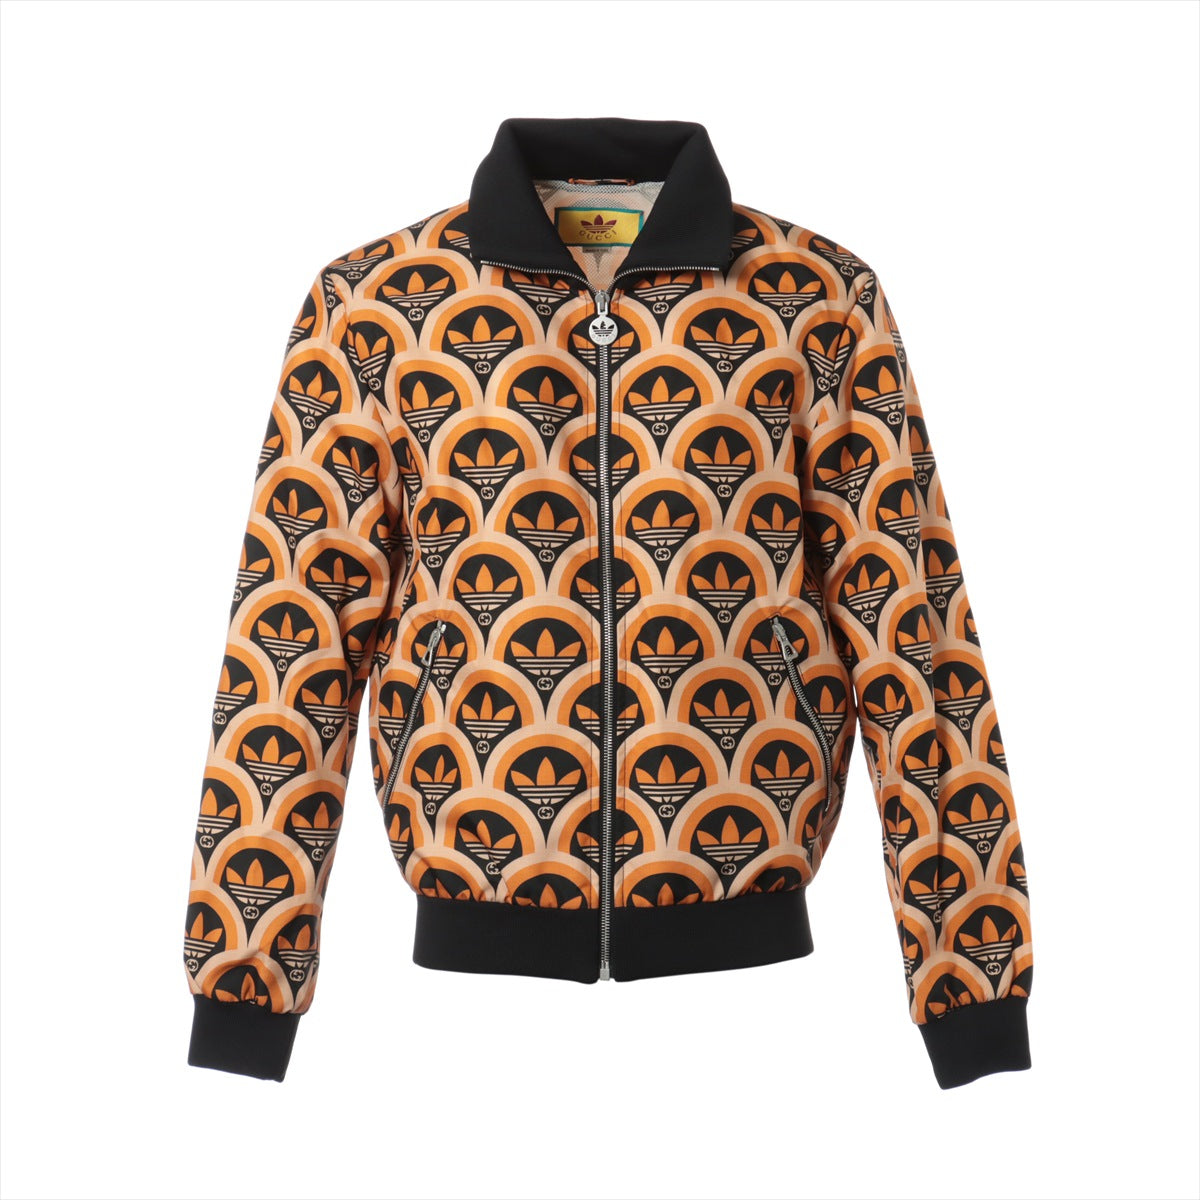 Gucci x Adidas Interlocking G 22 years Nylon Jacket 44 Men's Black x orange  696653